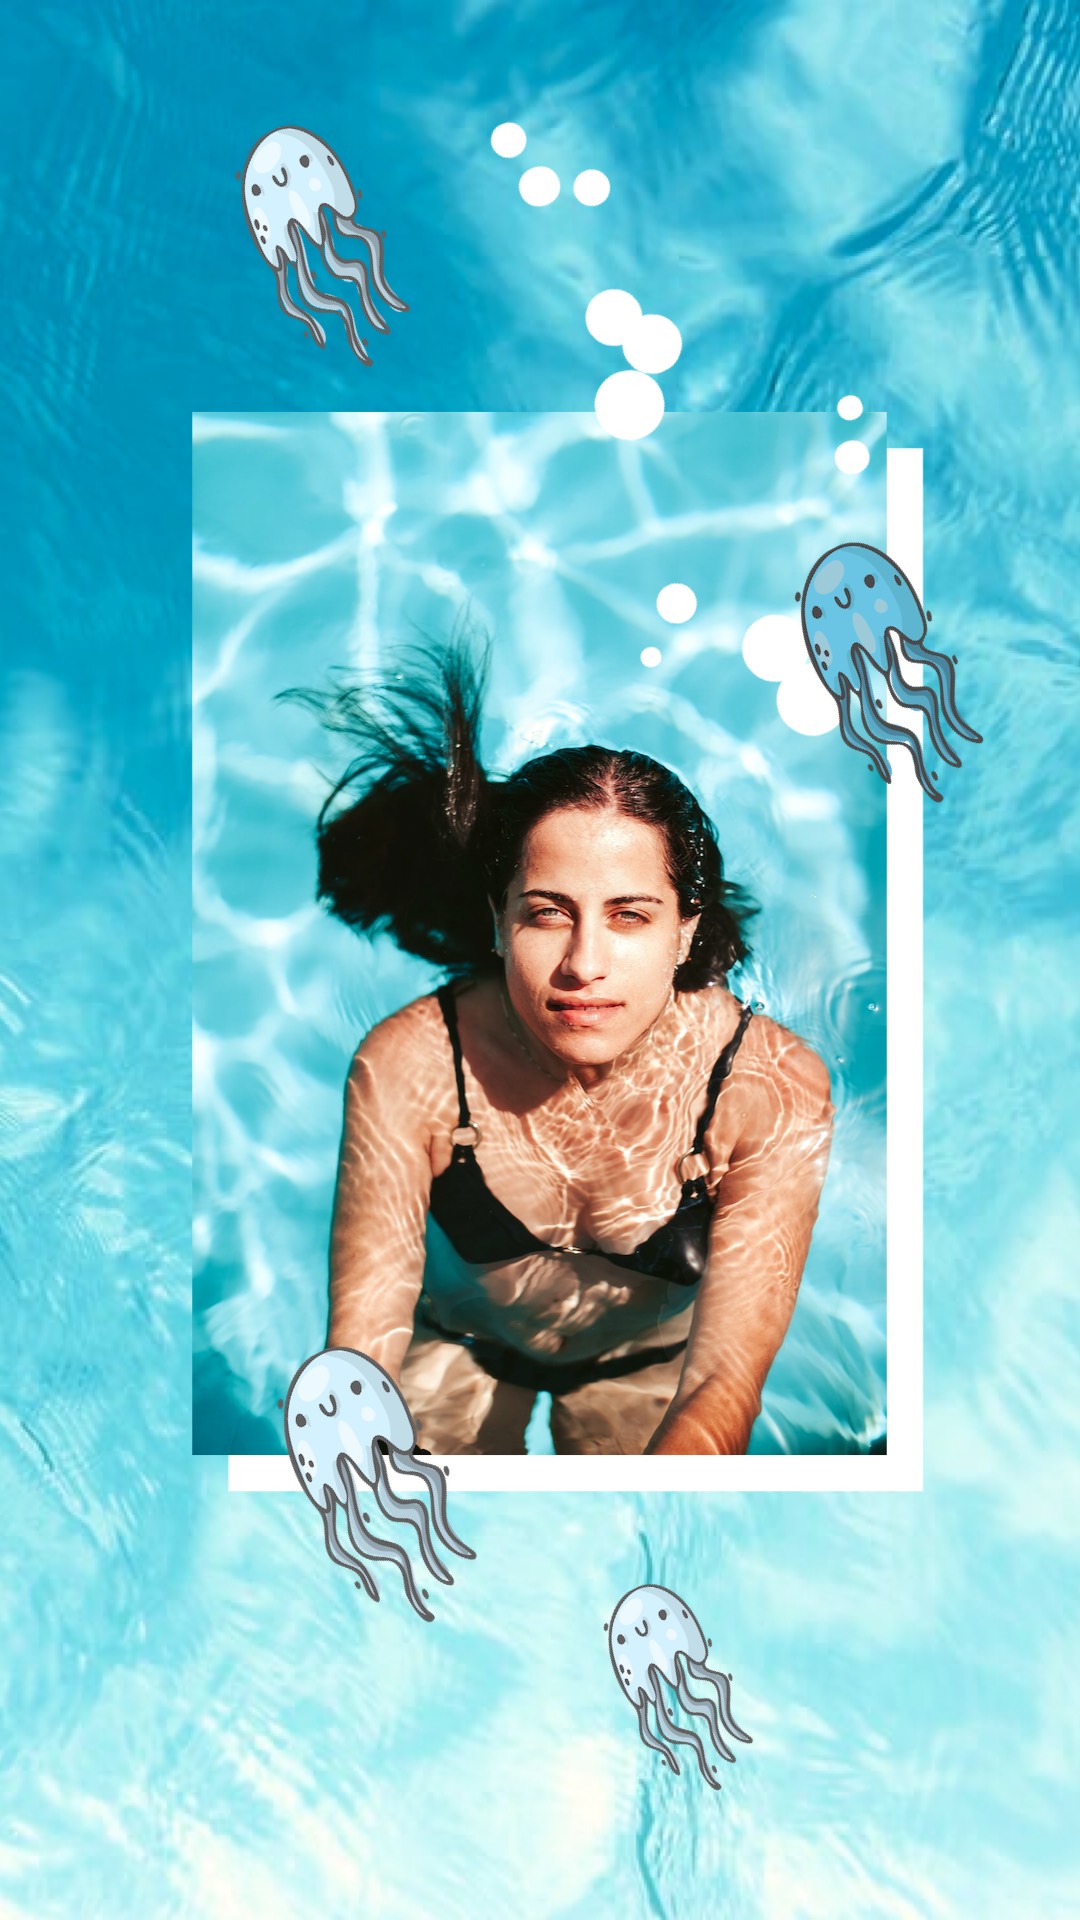 A Woman In A Bikini In A Swimming Pool Summer Story Template